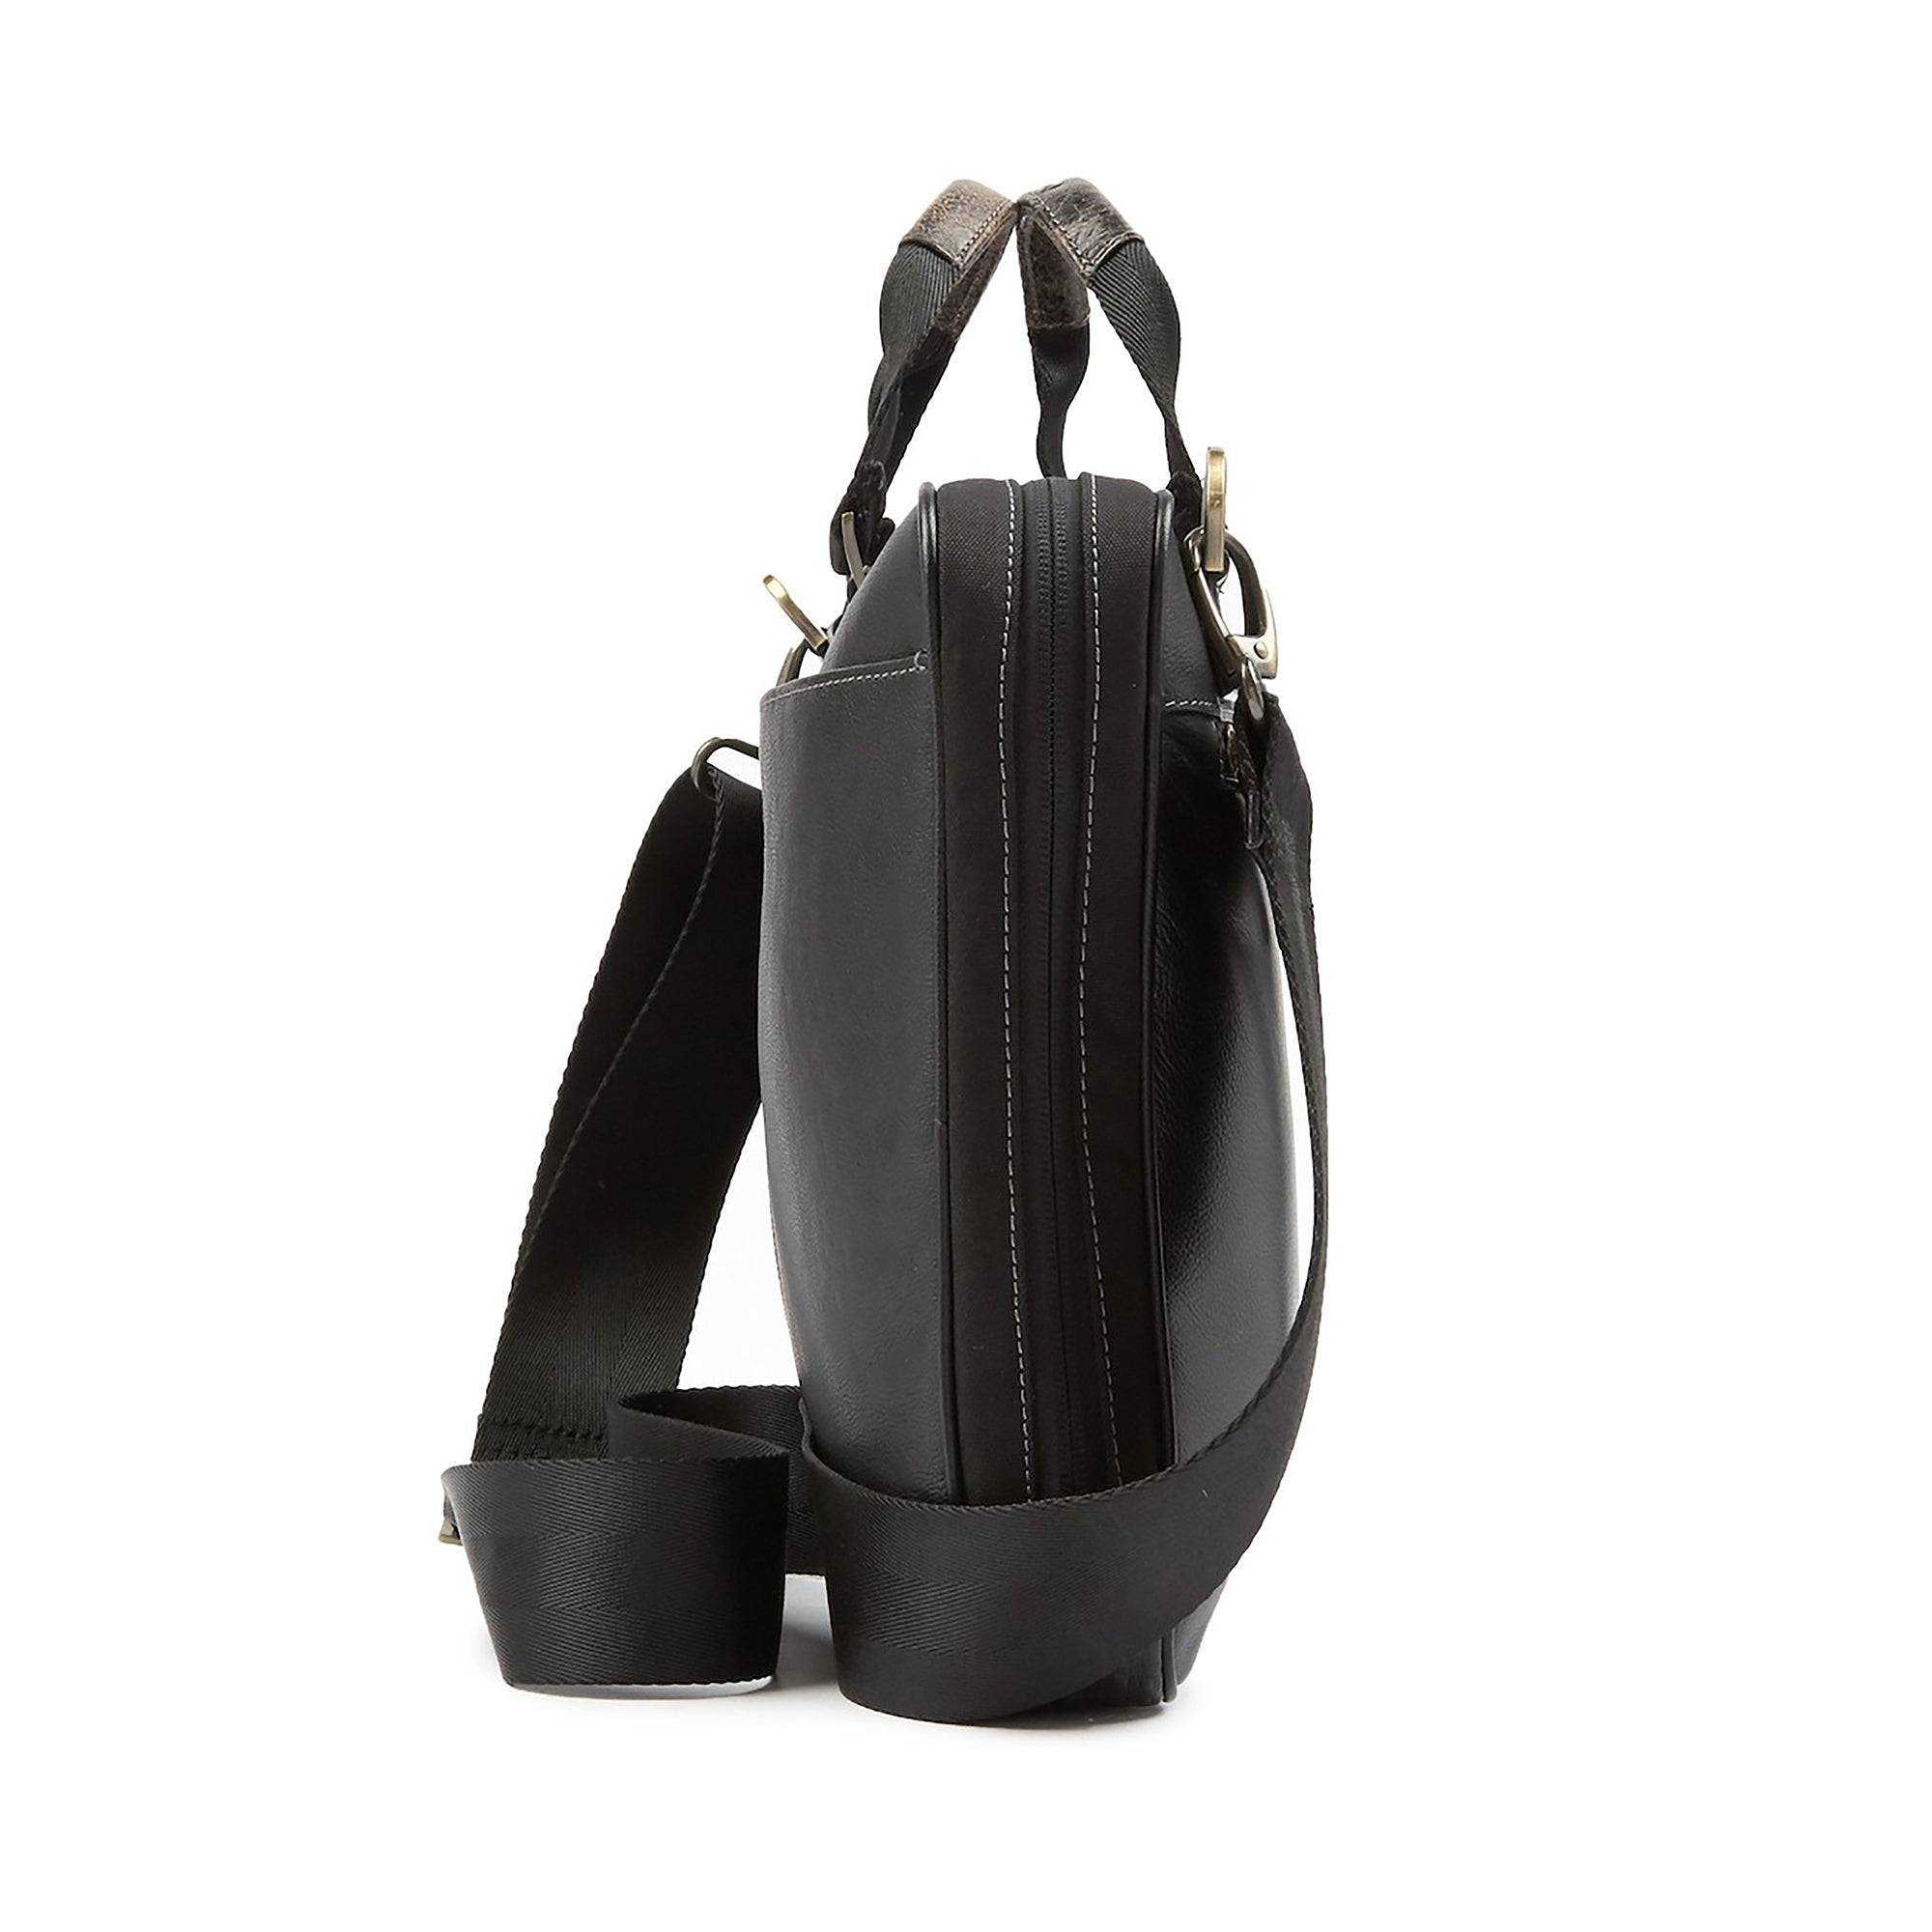 a black handbag on a white background